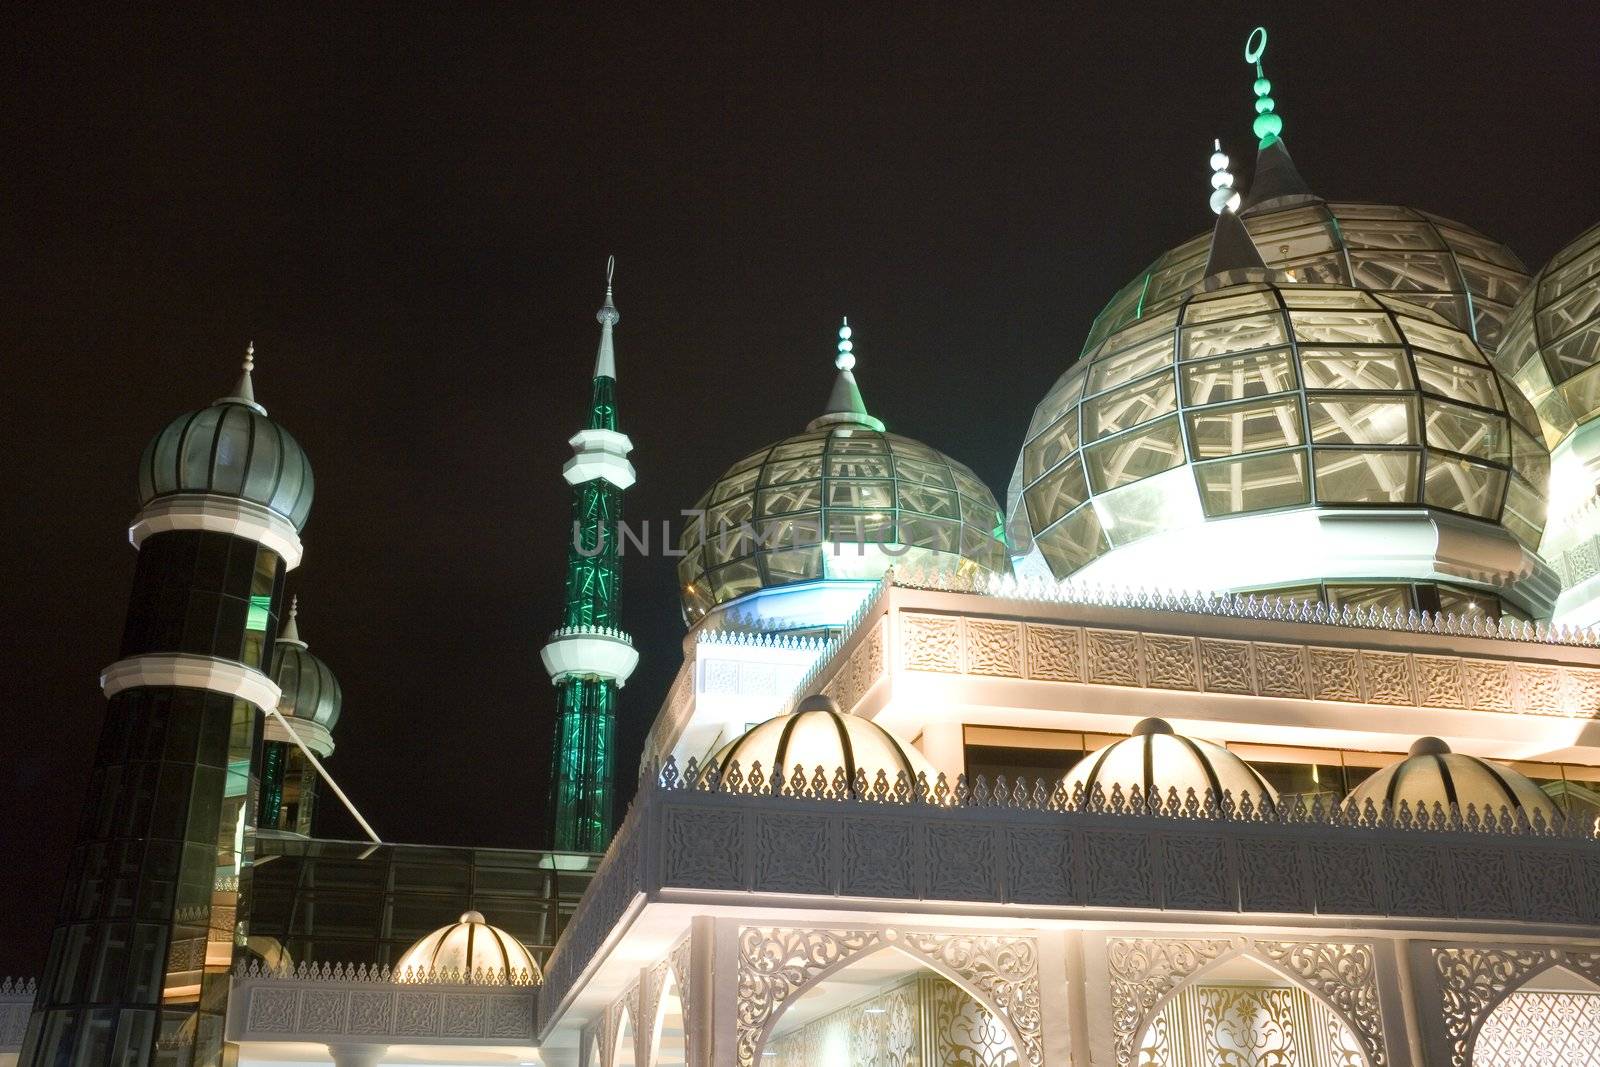 Night image of the Crystal Mosque, located in Kuala Terengganu, Malaysia.
